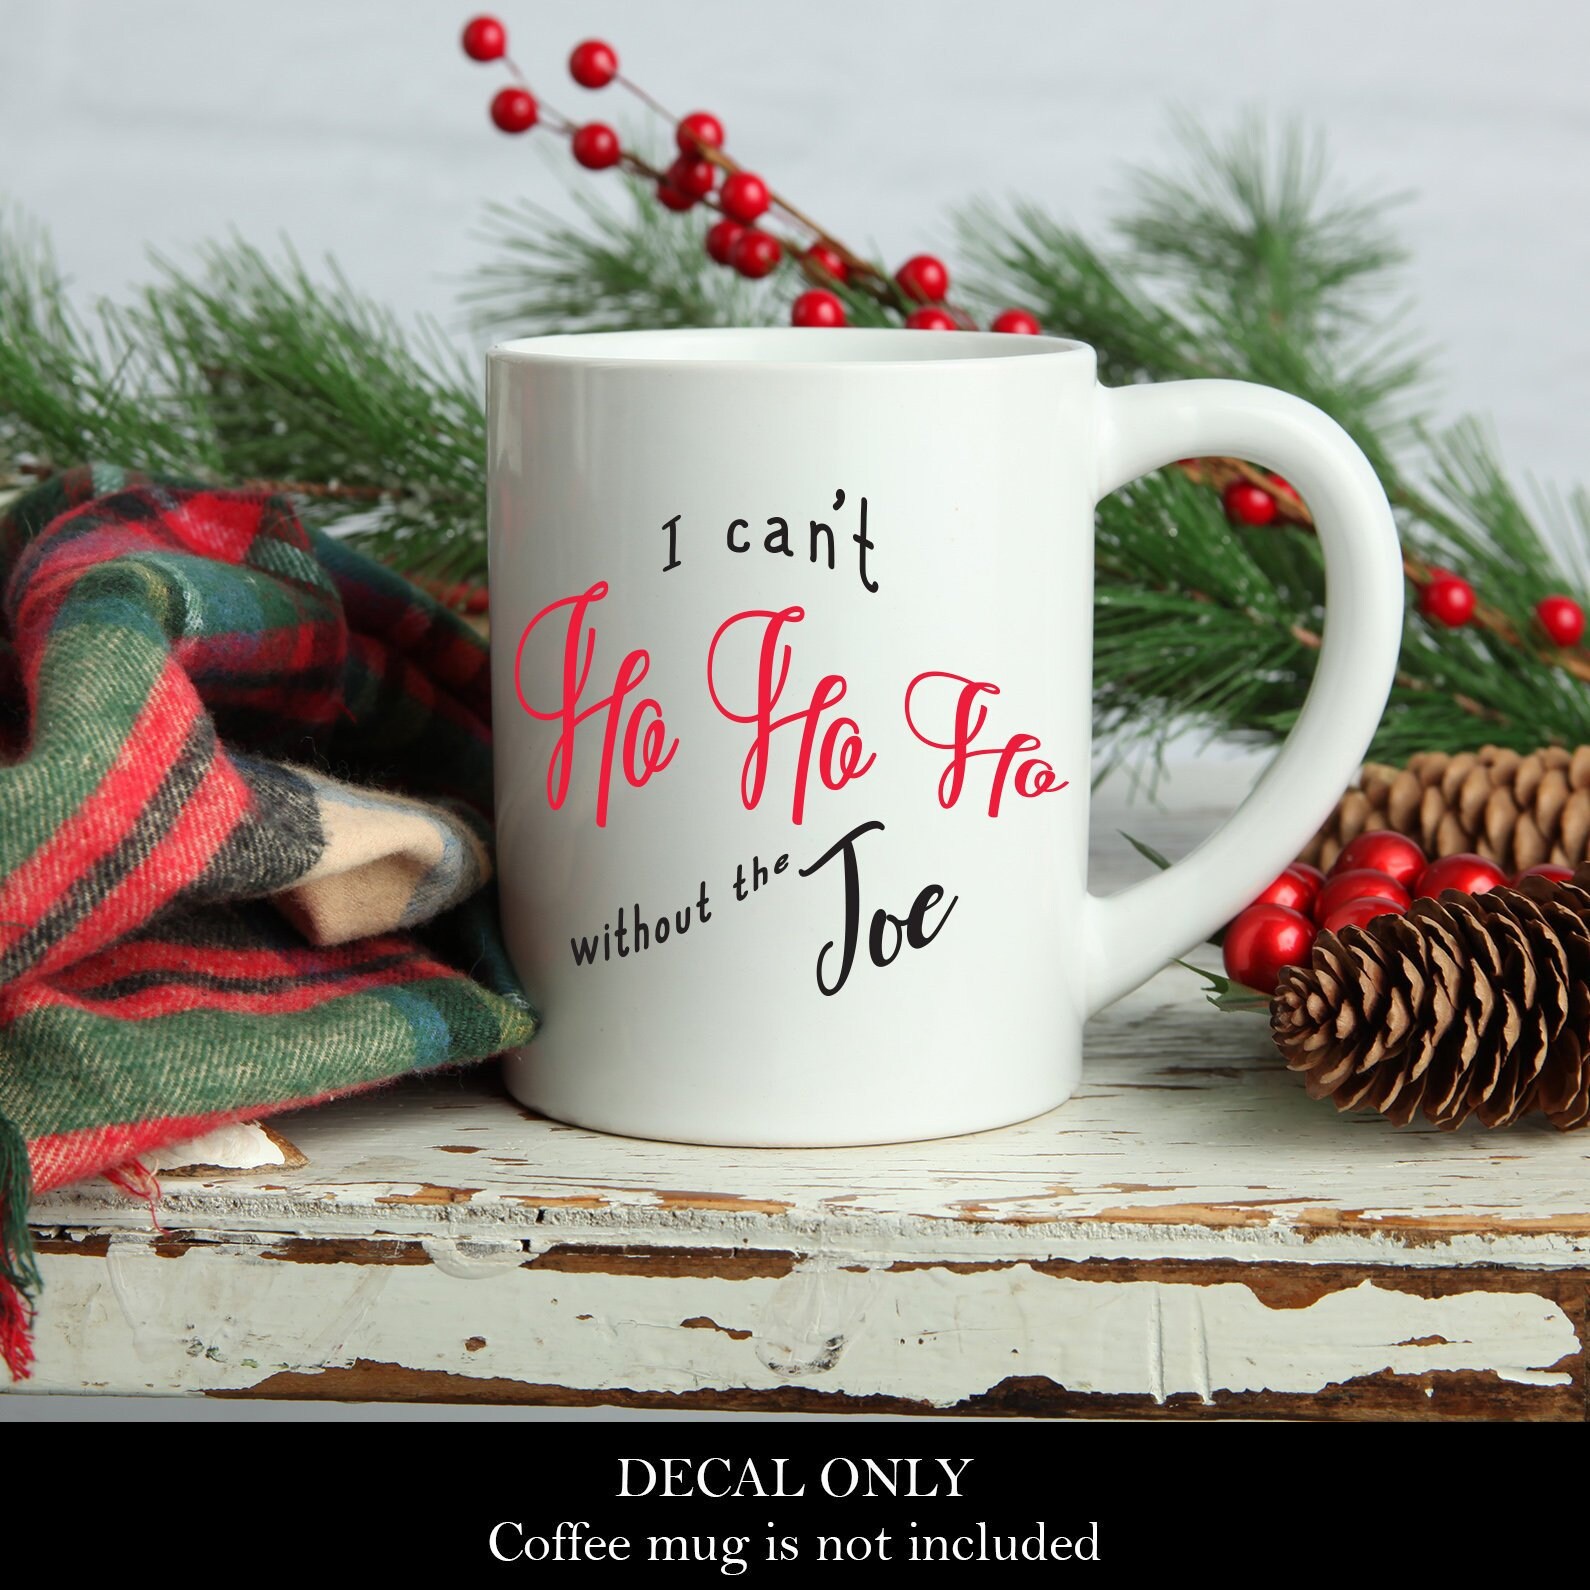 I Can't Ho Ho Ho without the Joe - Holiday Vinyl Sticker - Funny Coffee ...